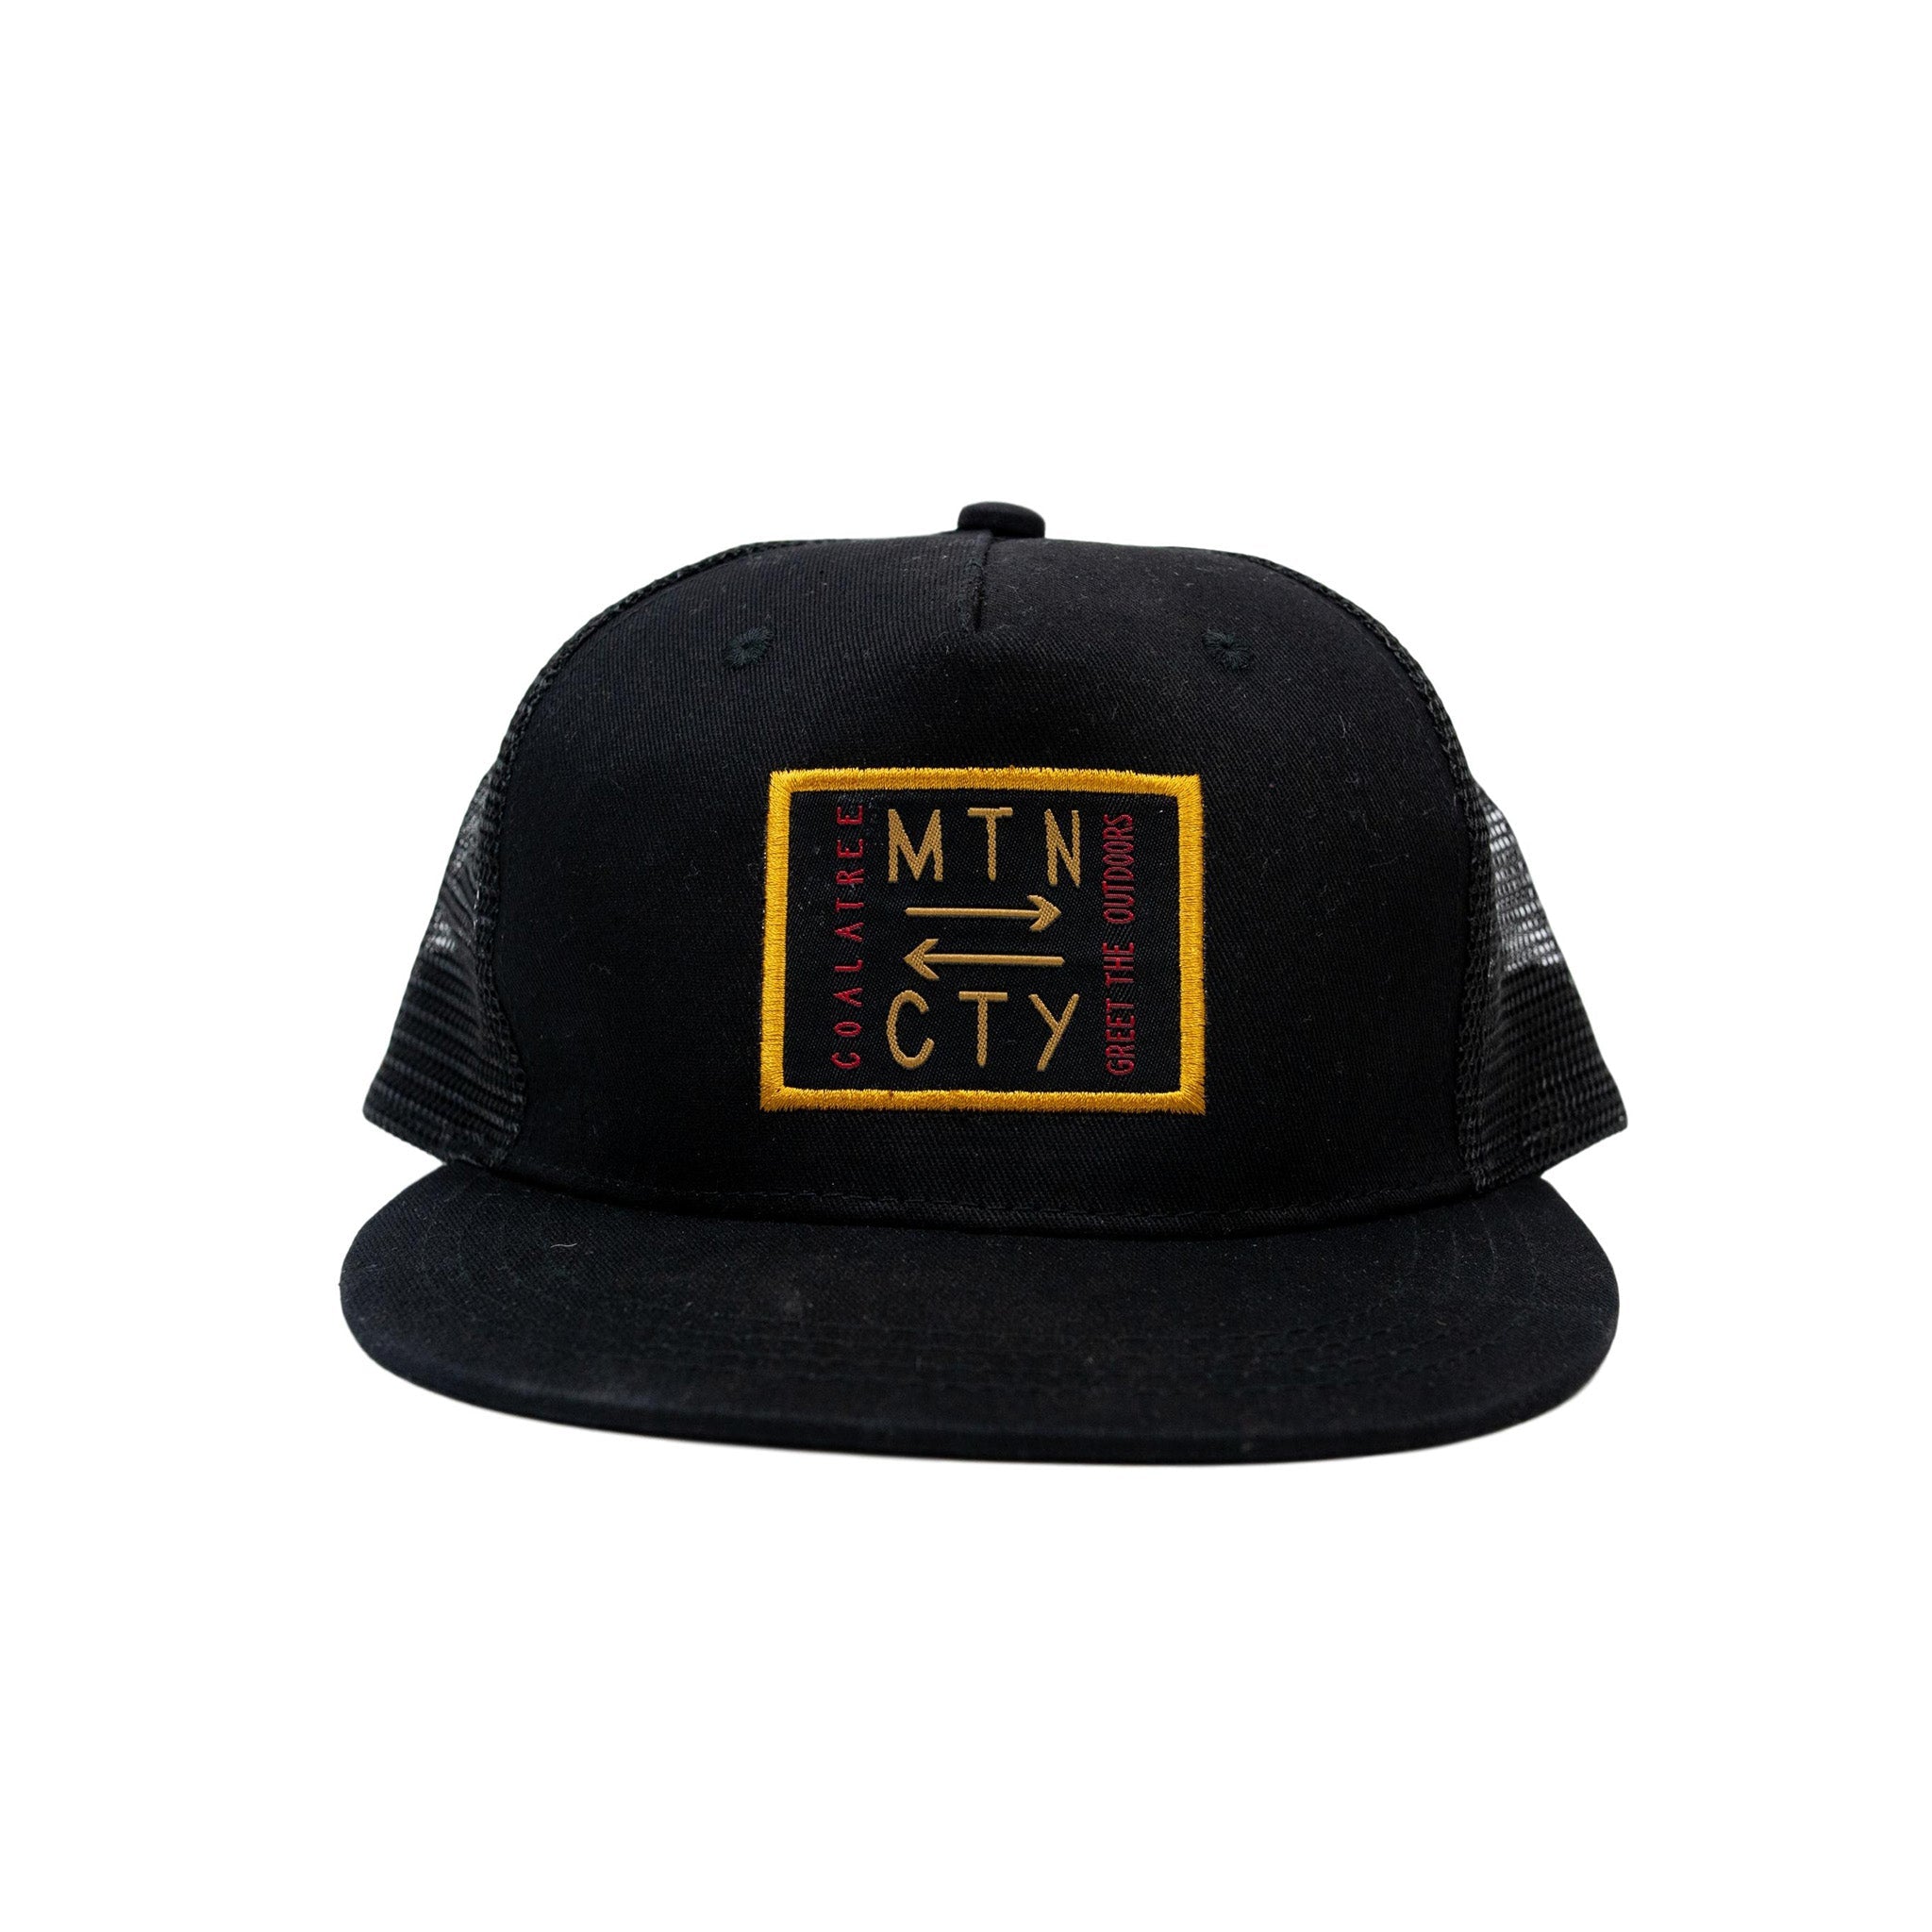 MTN2CTY Trucker Hat